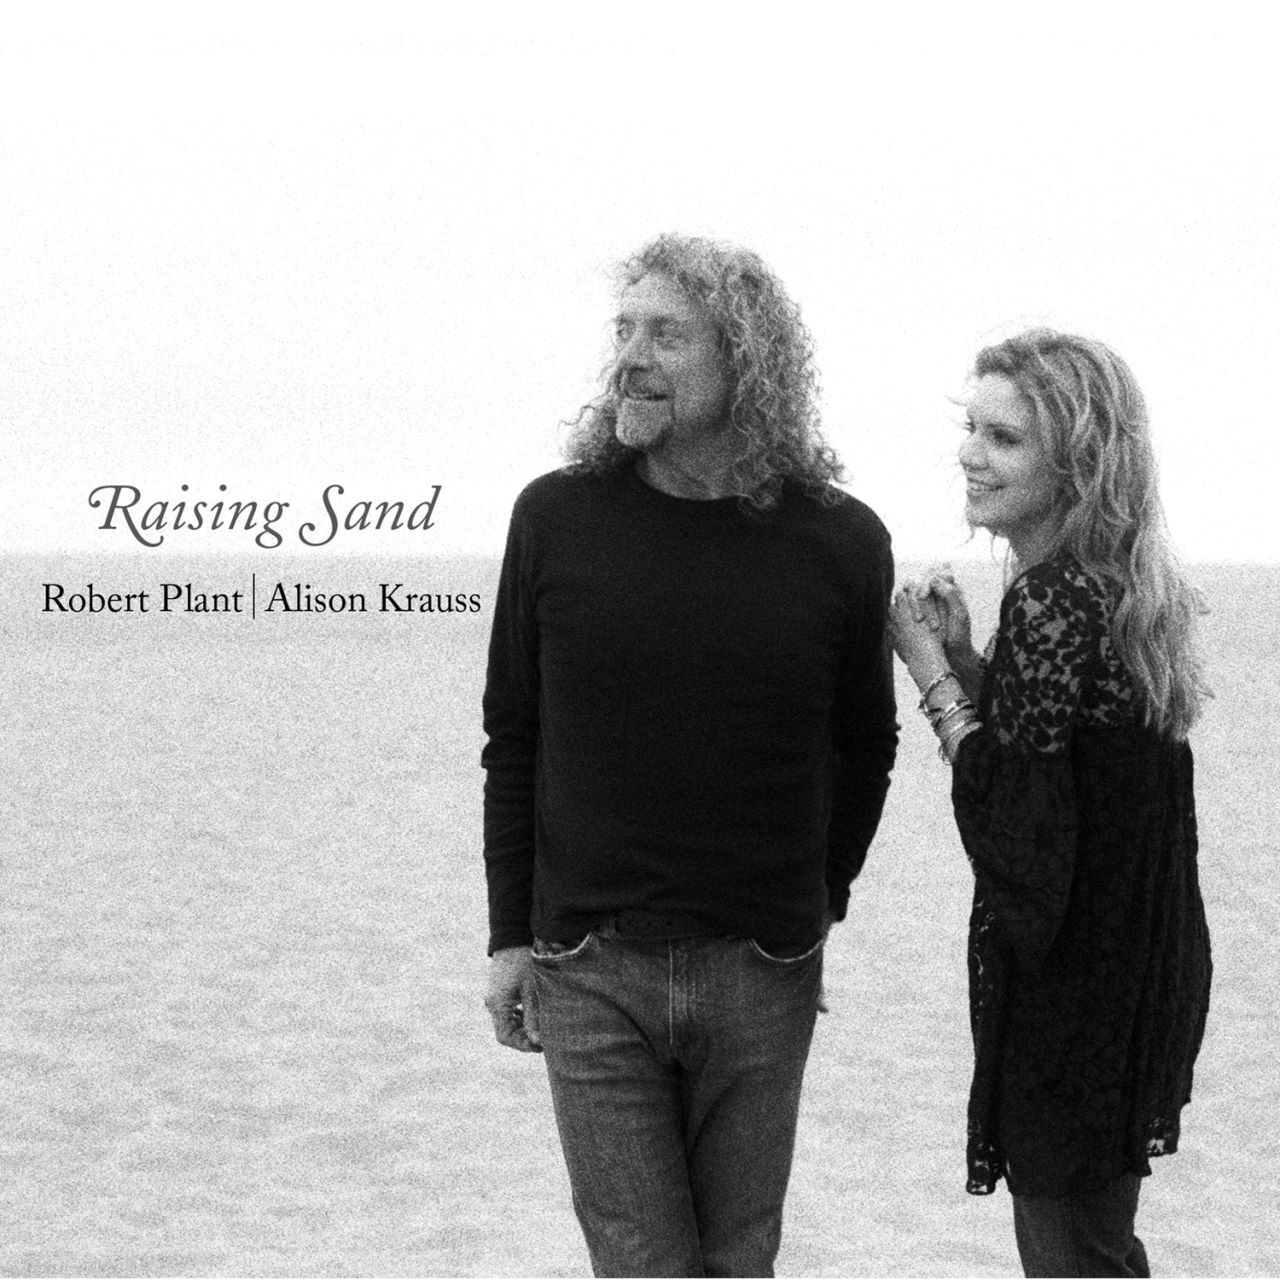 Robert Plant, Alison Krauss - Raising Sand cover album